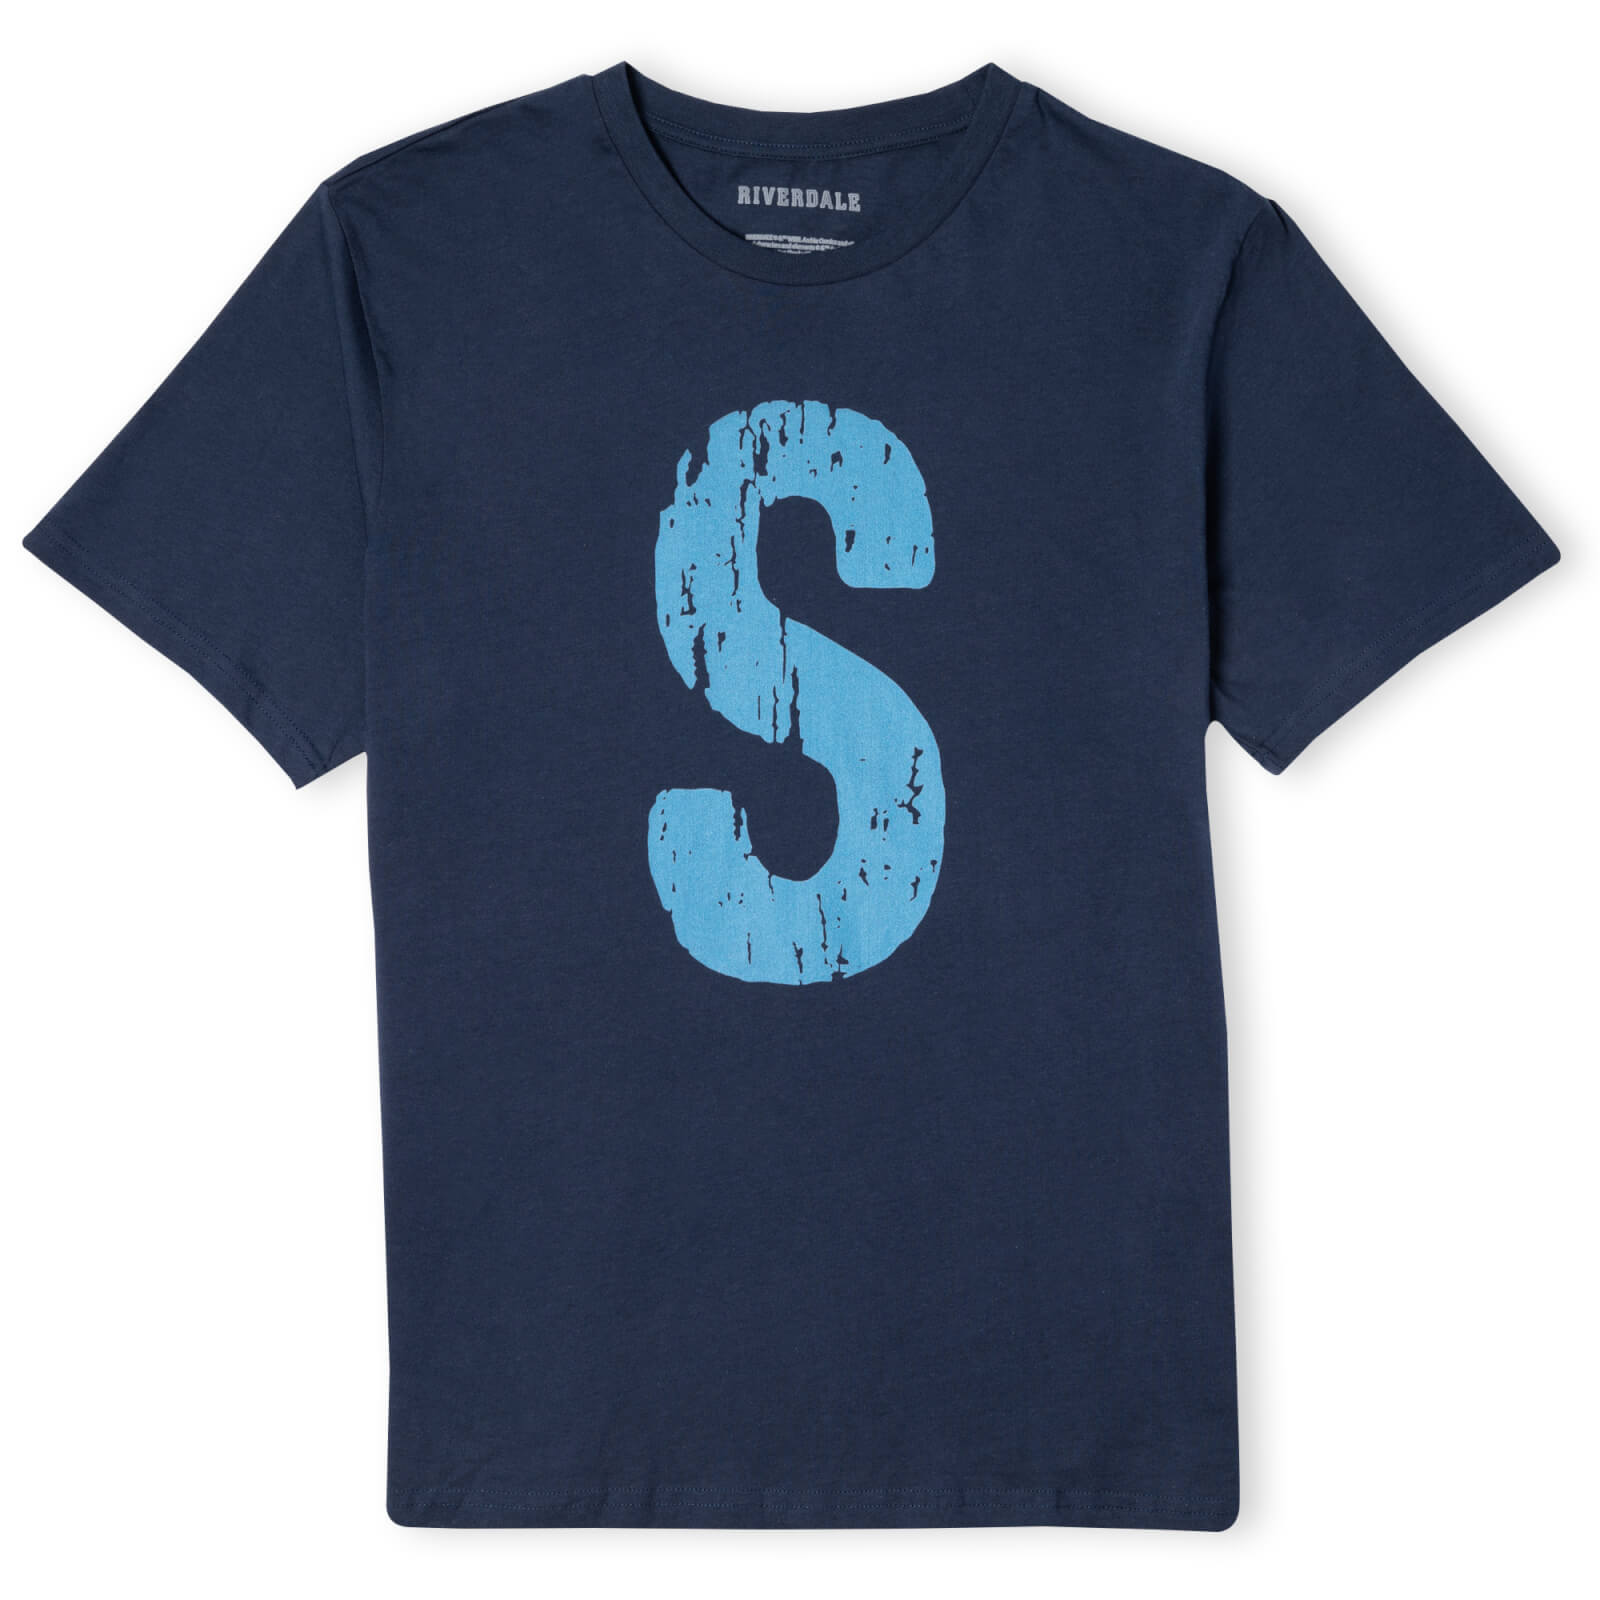 Image of Riverdale Jughead S Shirt Unisex T-Shirt - Navy - M - Marineblau